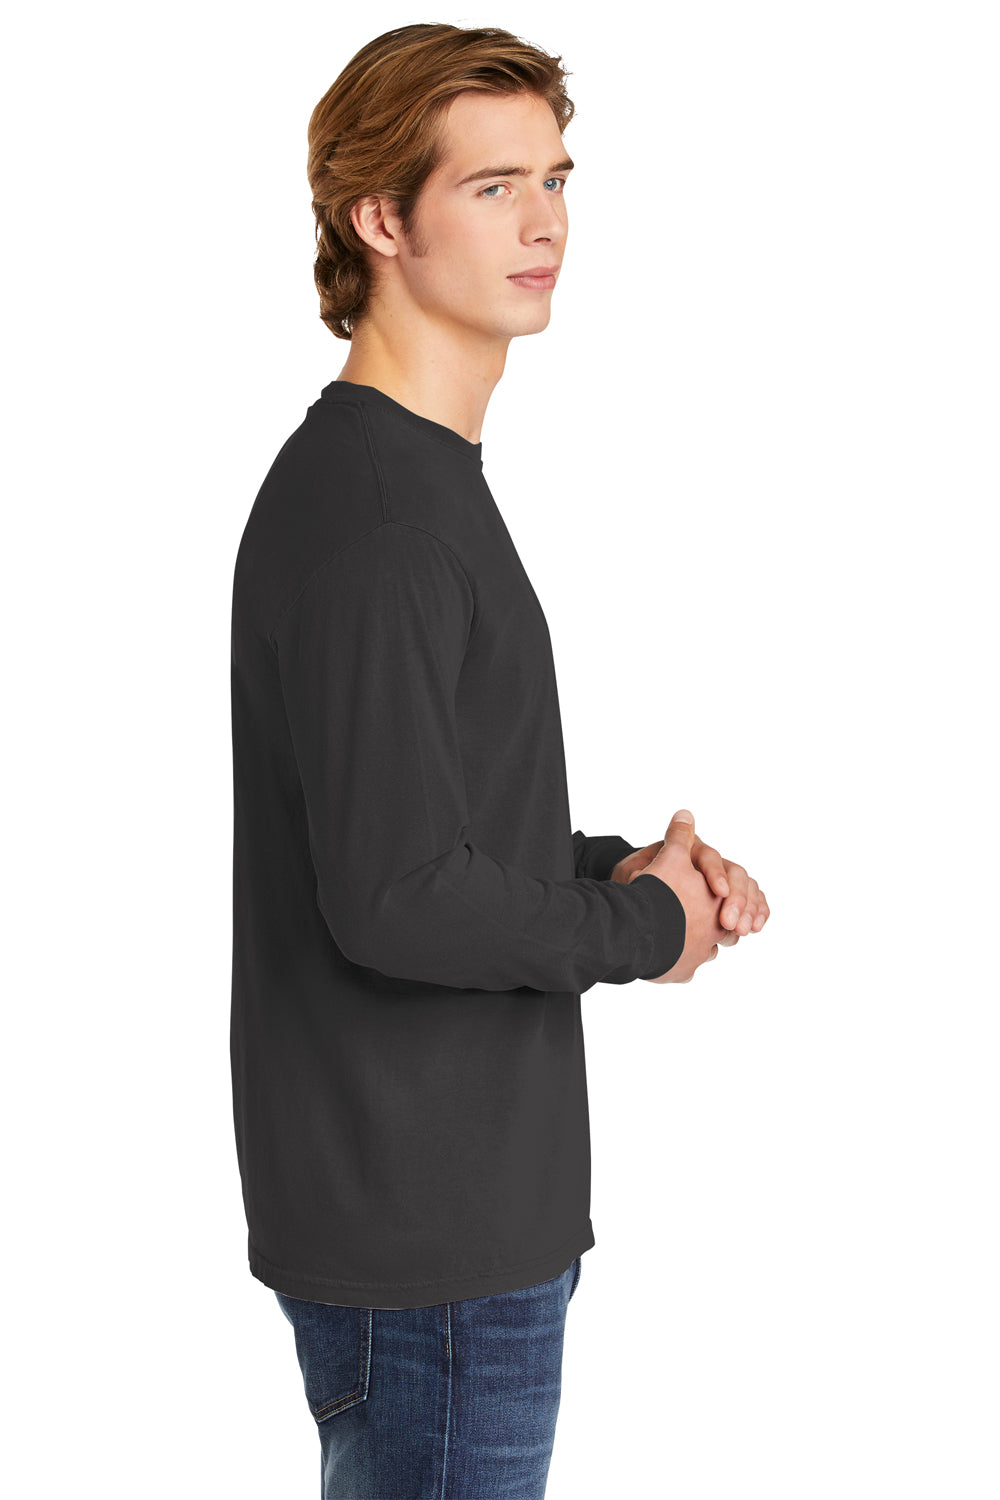 Comfort Colors 6014/C6014 Mens Long Sleeve Crewneck T-Shirt Graphite Grey Side